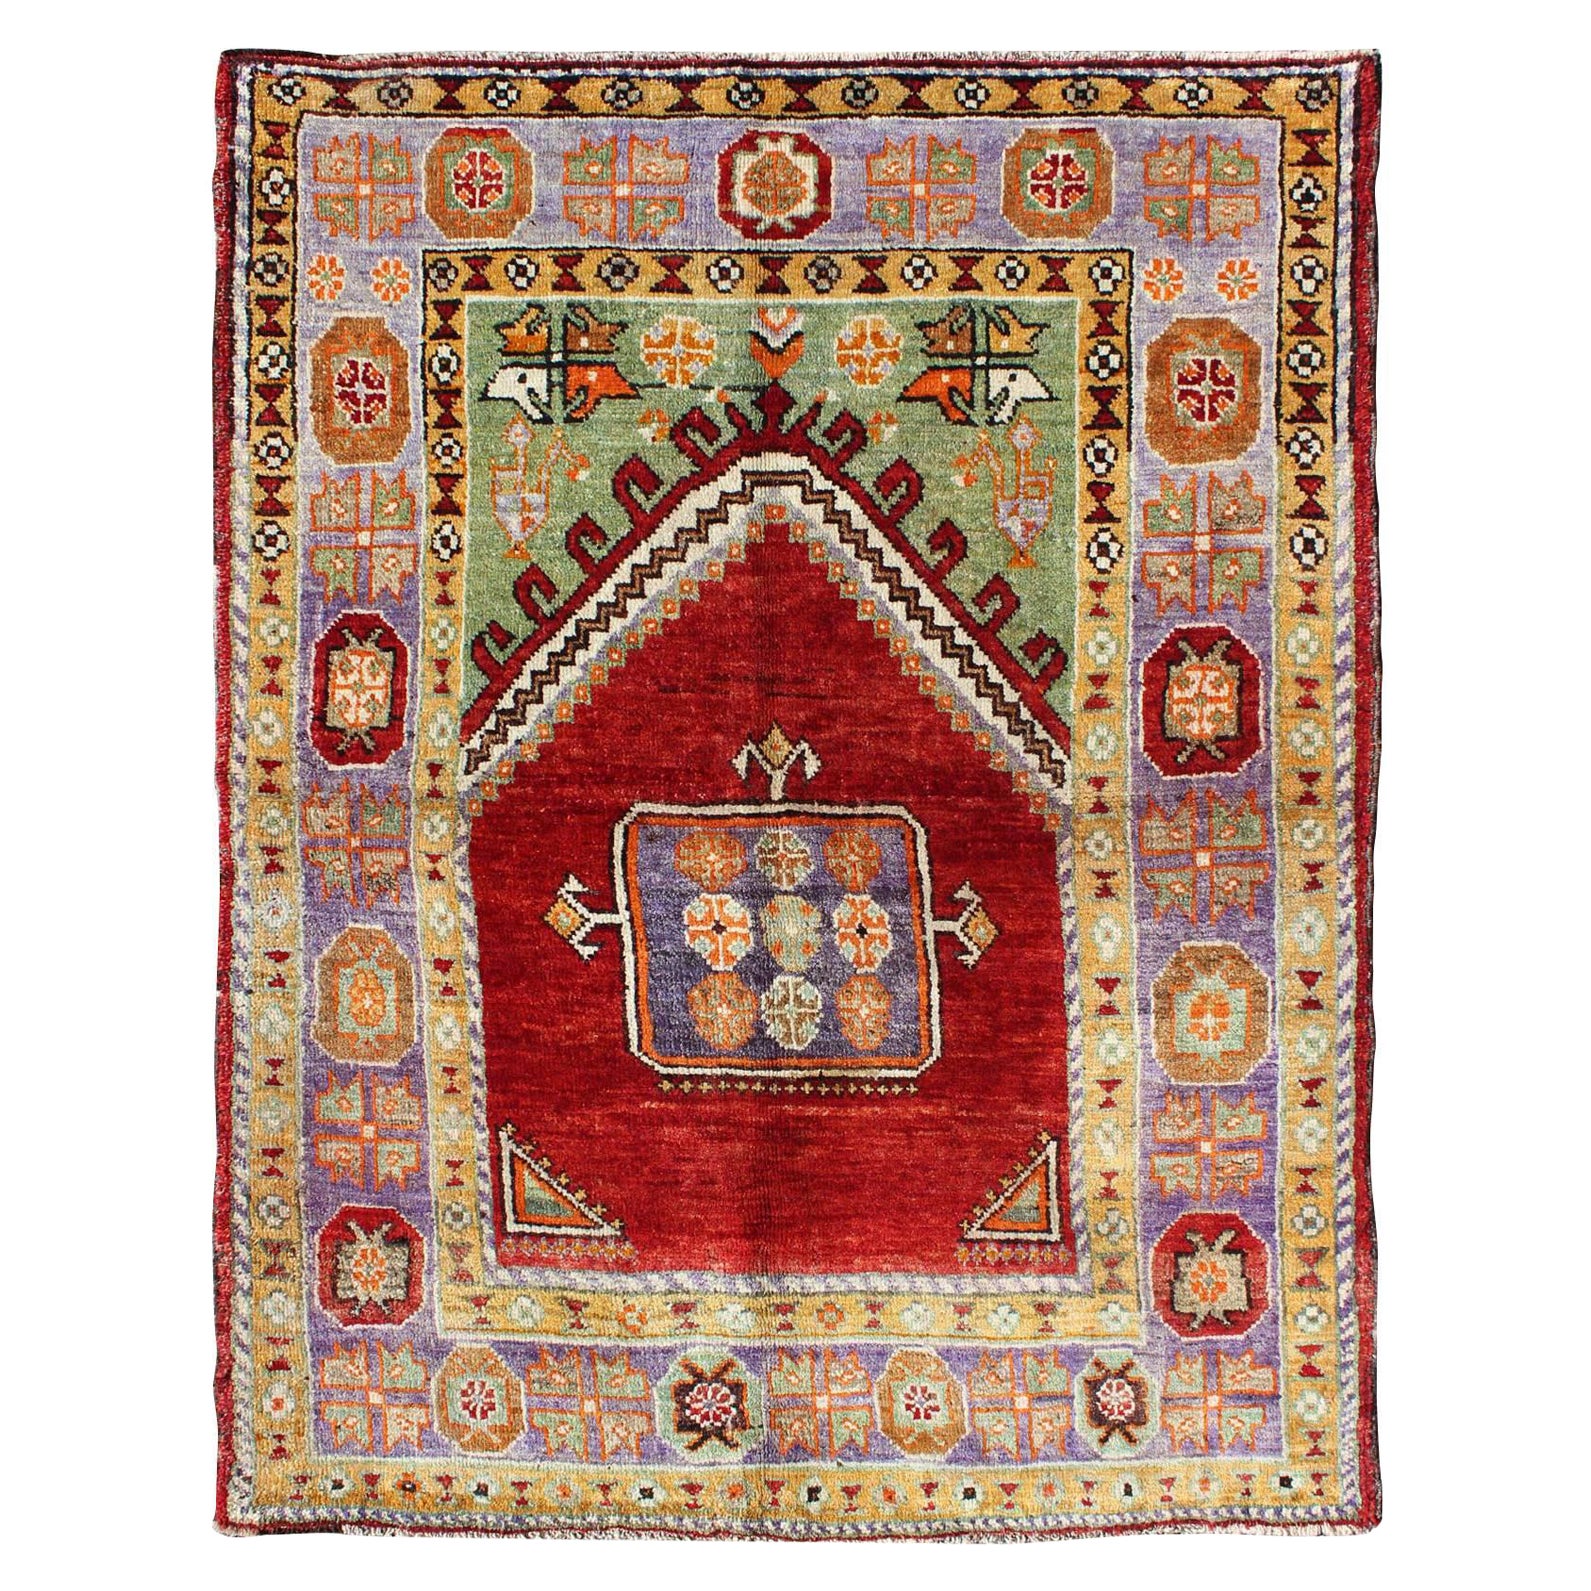 1930's Antique Prayer Design Turkish rug in Colorful Geometric Pattern